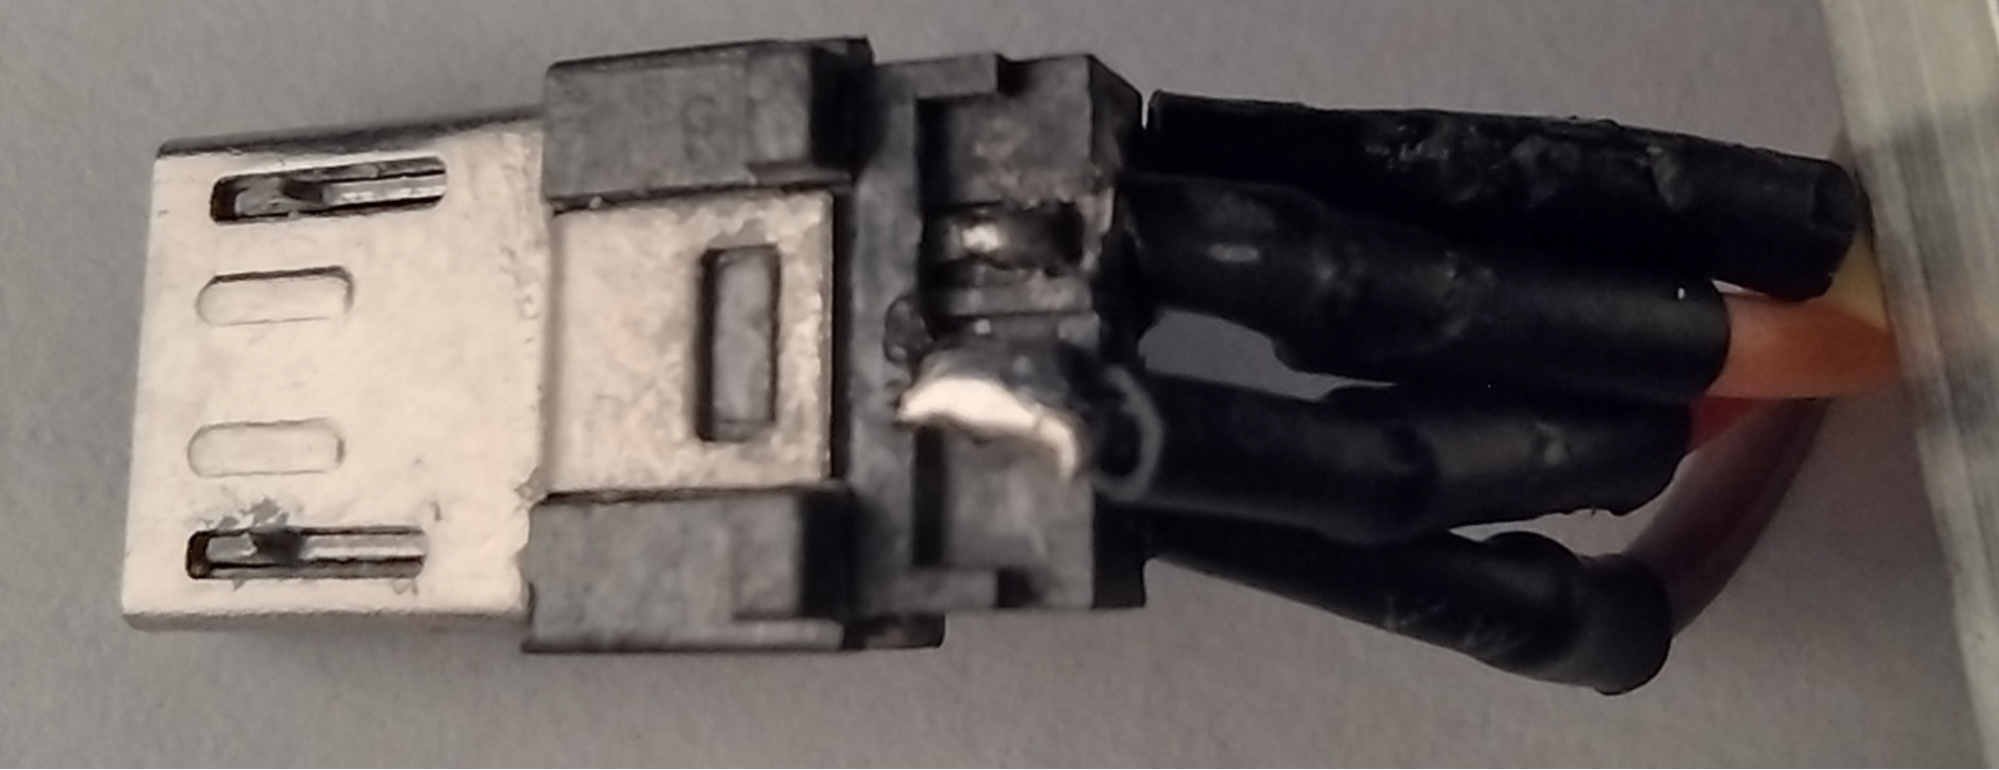 USB Connector Close 2